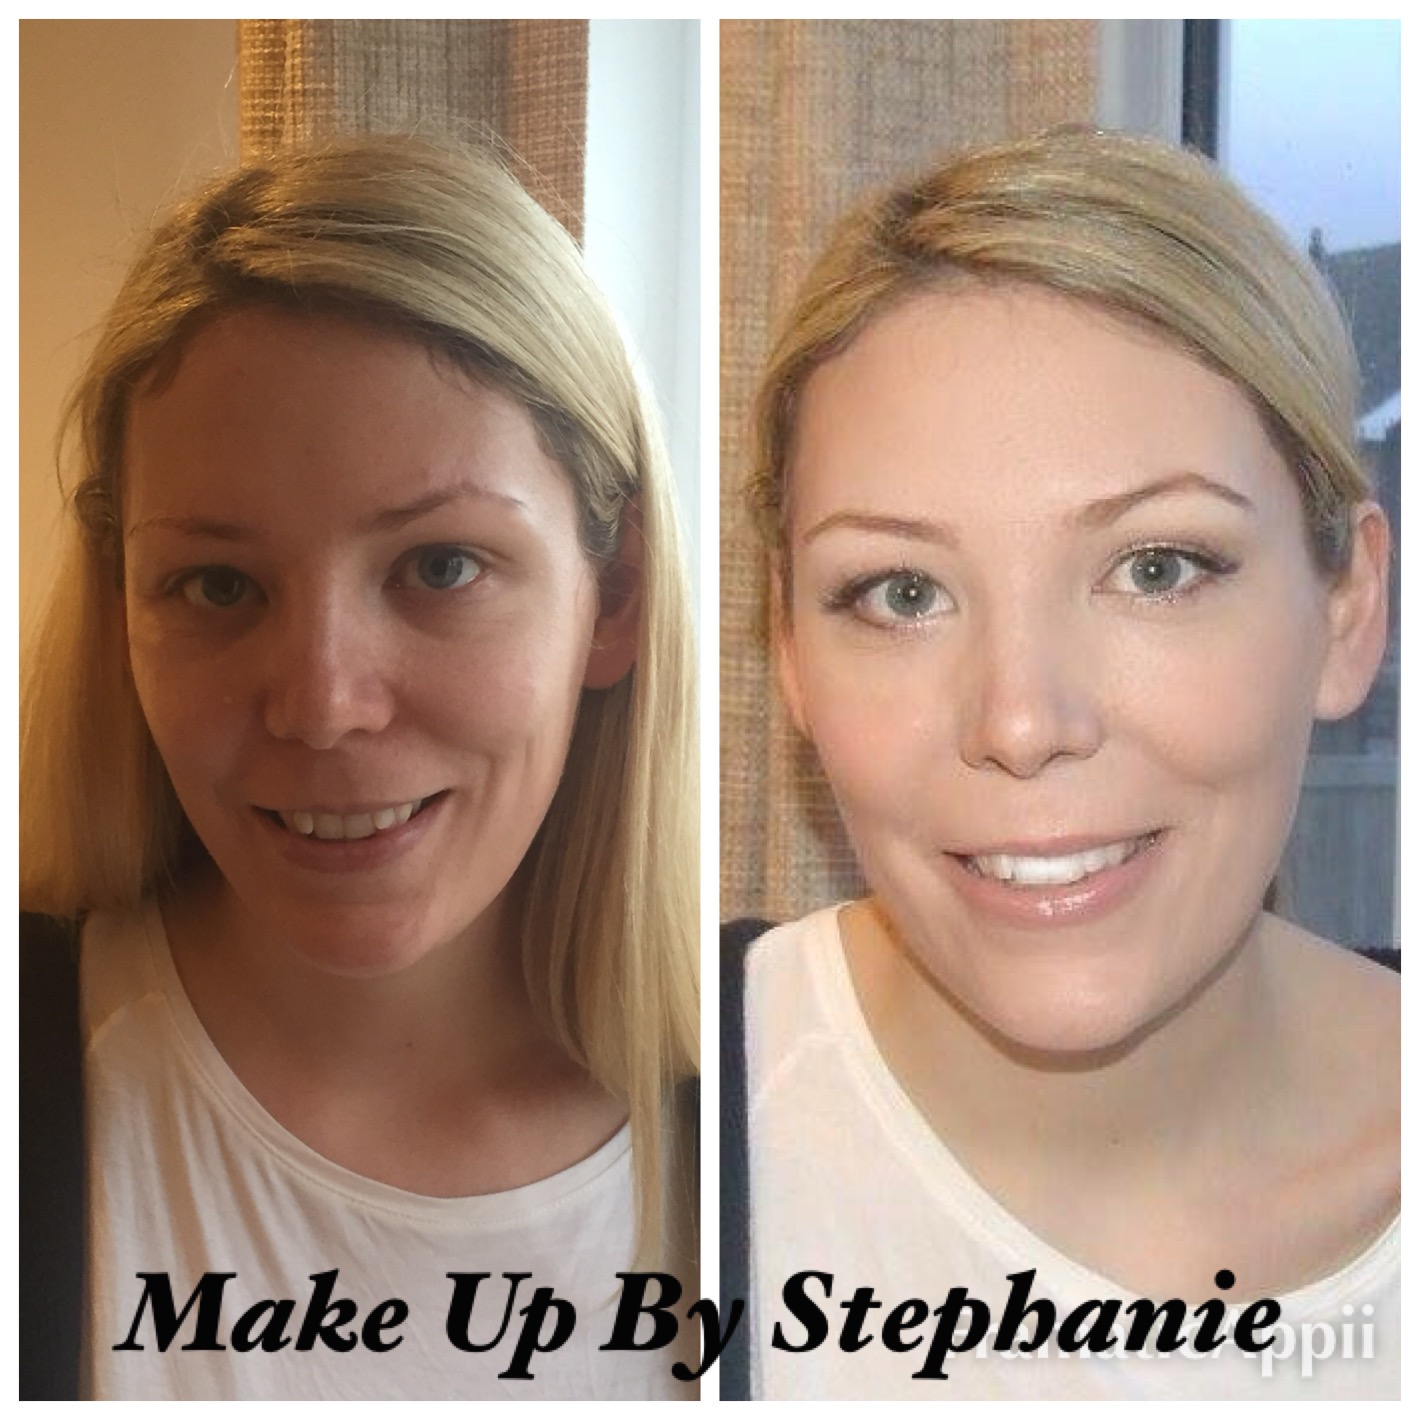 Makeup artist essex braintree makeup artist (29)